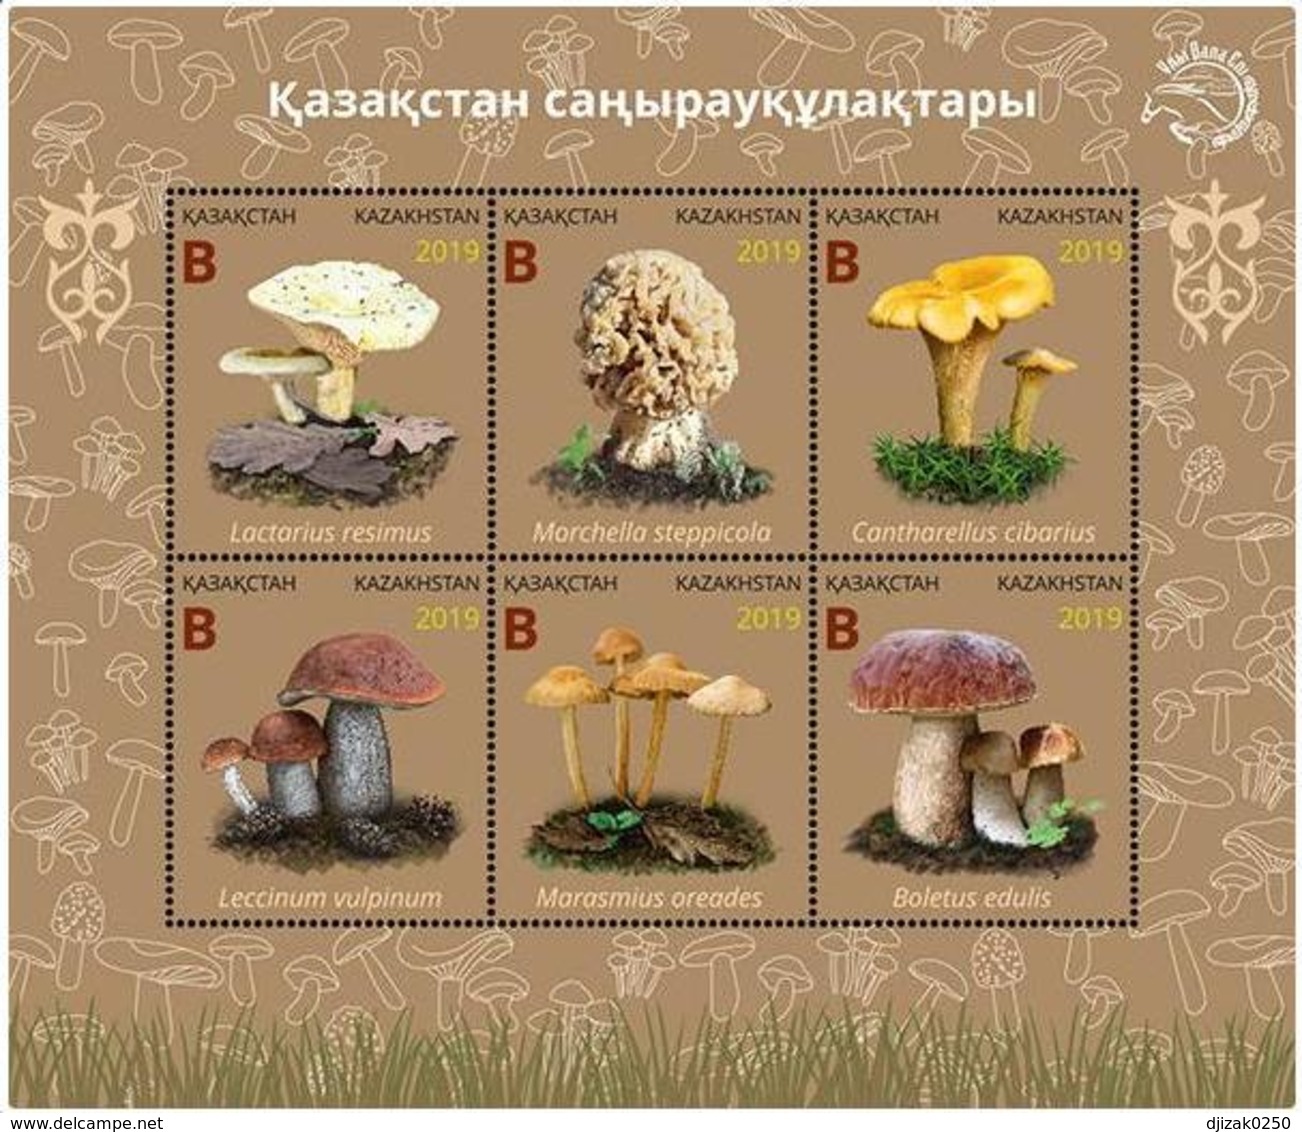 Kazakhstan 2019.Souvenir Sheet. Mushrooms Of Kazakhstan. NEW!!! - Mushrooms